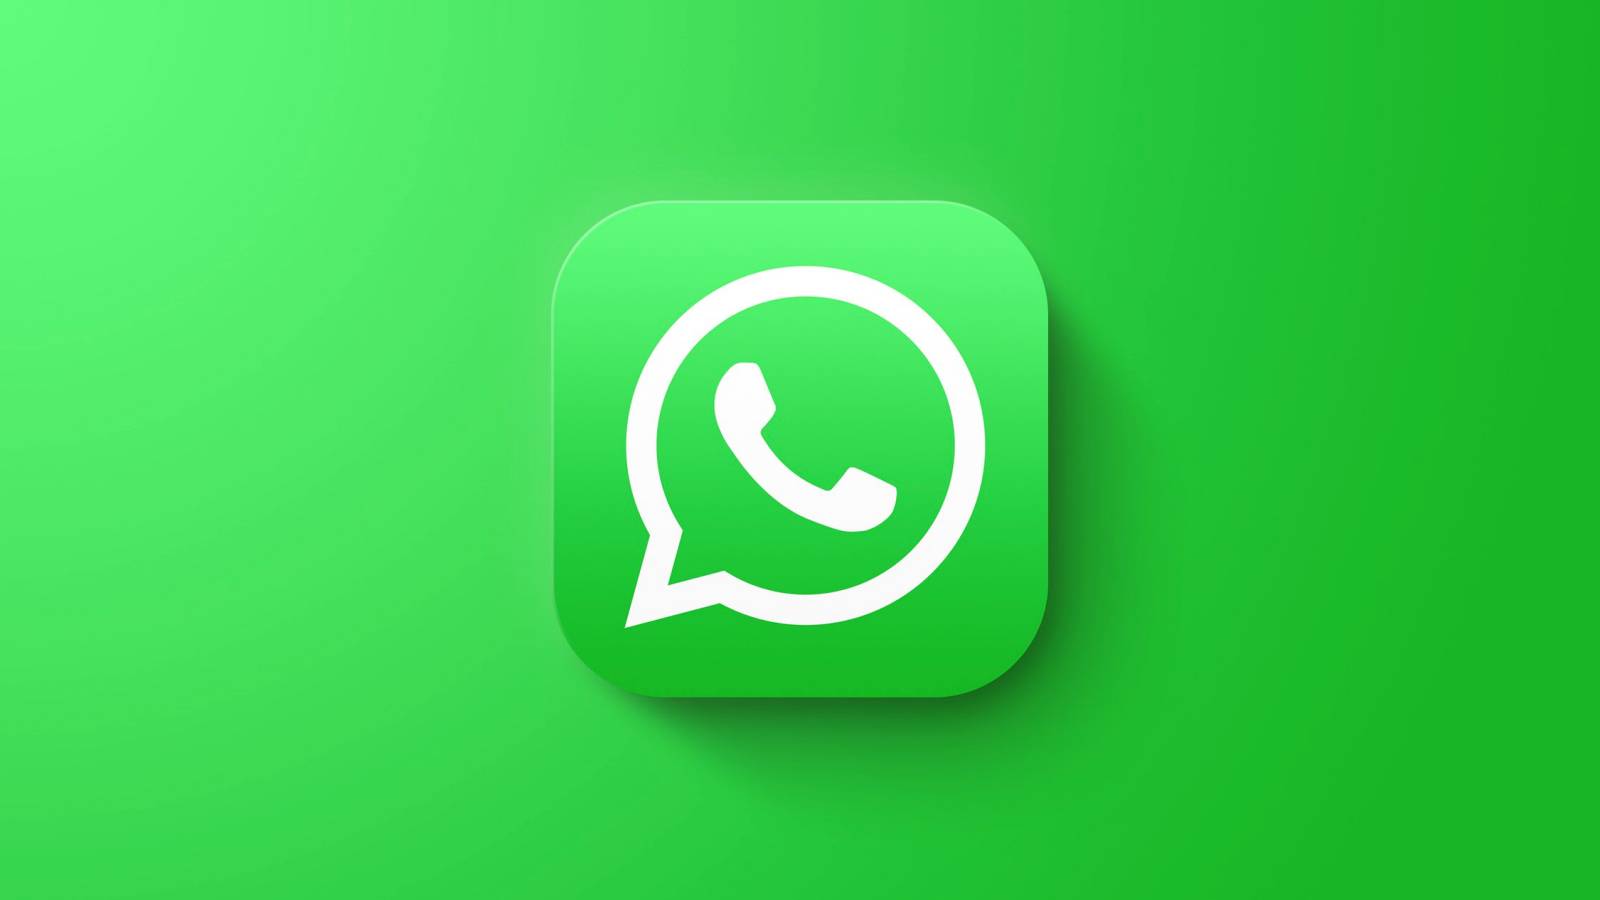 WhatsApp Anunt Oficial LANSARII Noutati Majore iPhone Android VIDEO